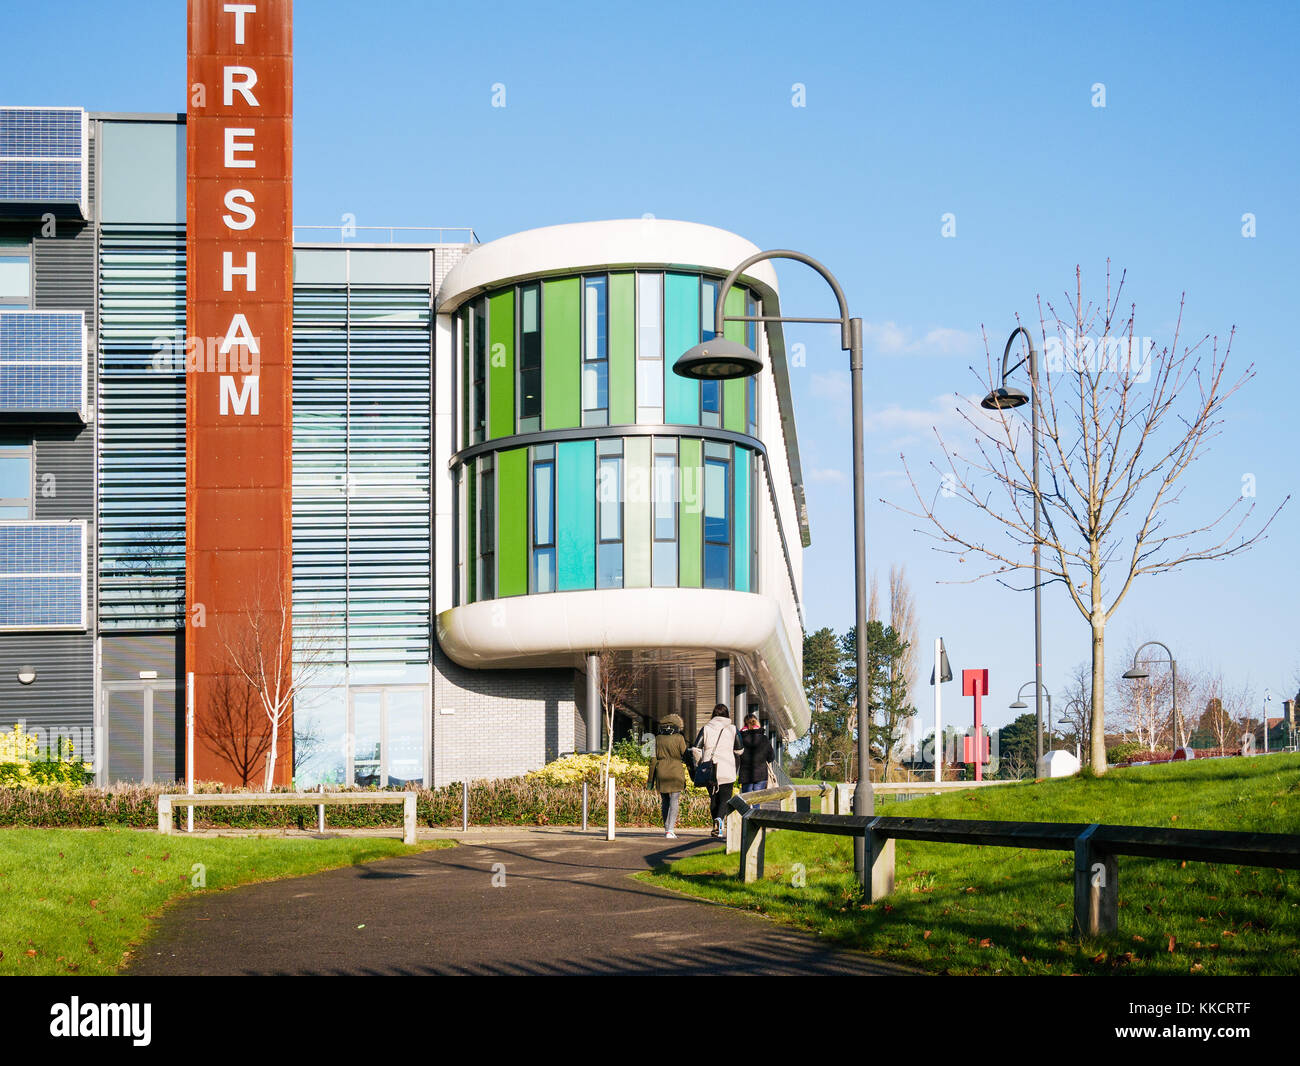 Tresham college, Corby, Northamptonshire, England. Stock Photo